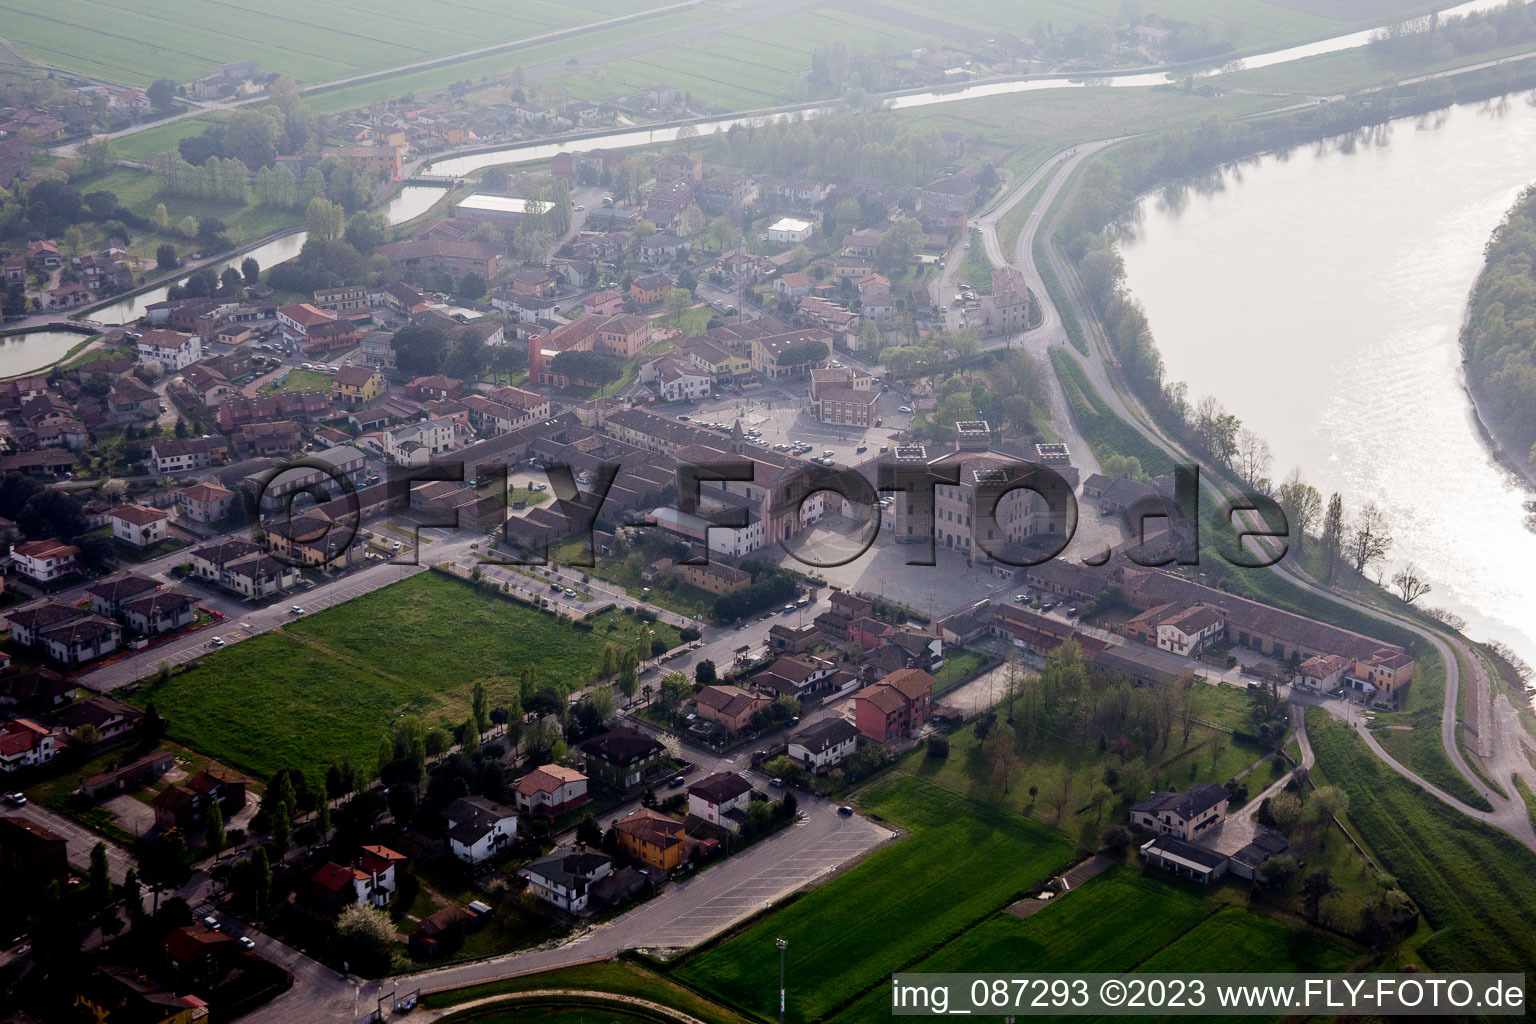 Luftbild von Mesola im Bundesland Emilia-Romagna, Italien